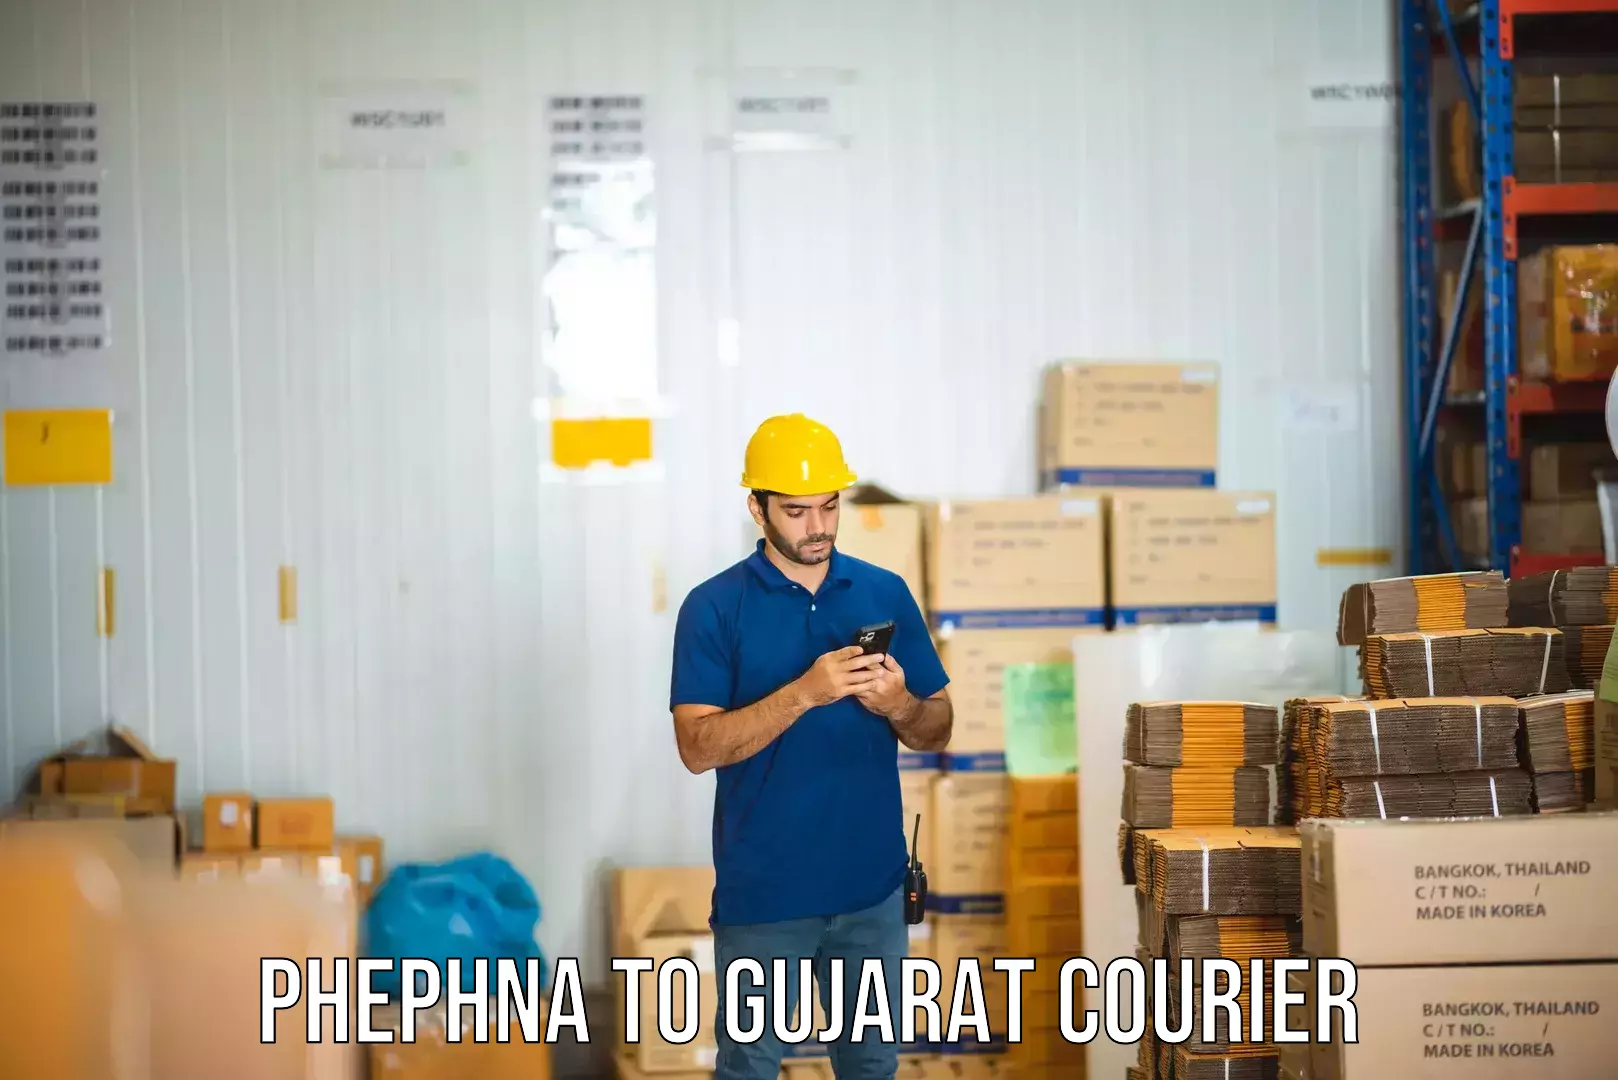 Nationwide shipping capabilities Phephna to Surat